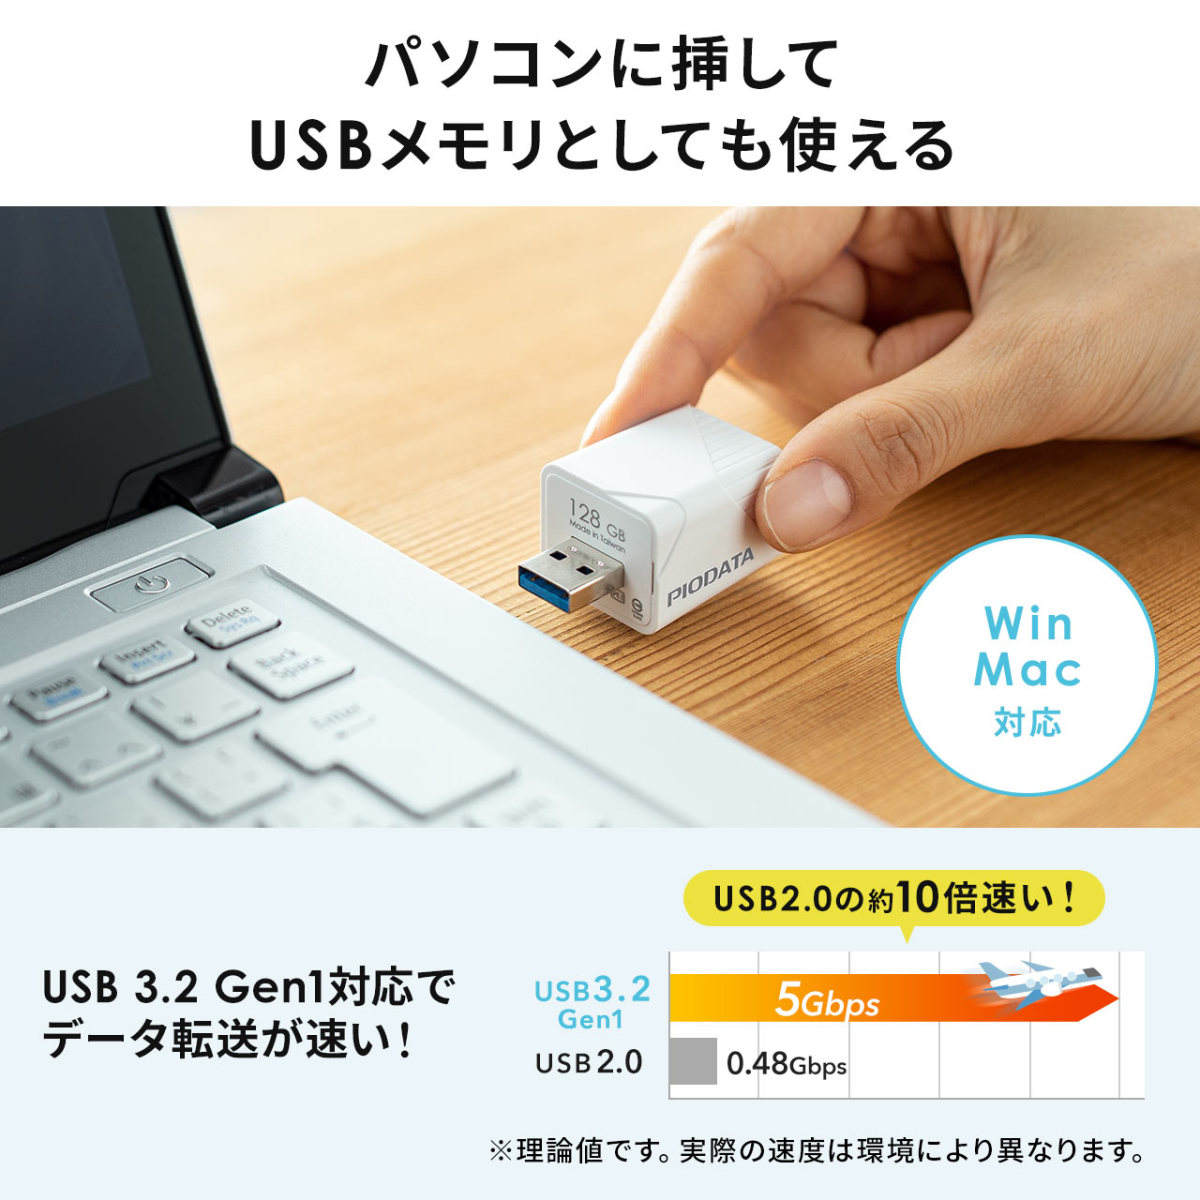 iPhone iPad バックアップ 自動 USBメモリ 256GB Mfi認証 USB3.2 Gen1 